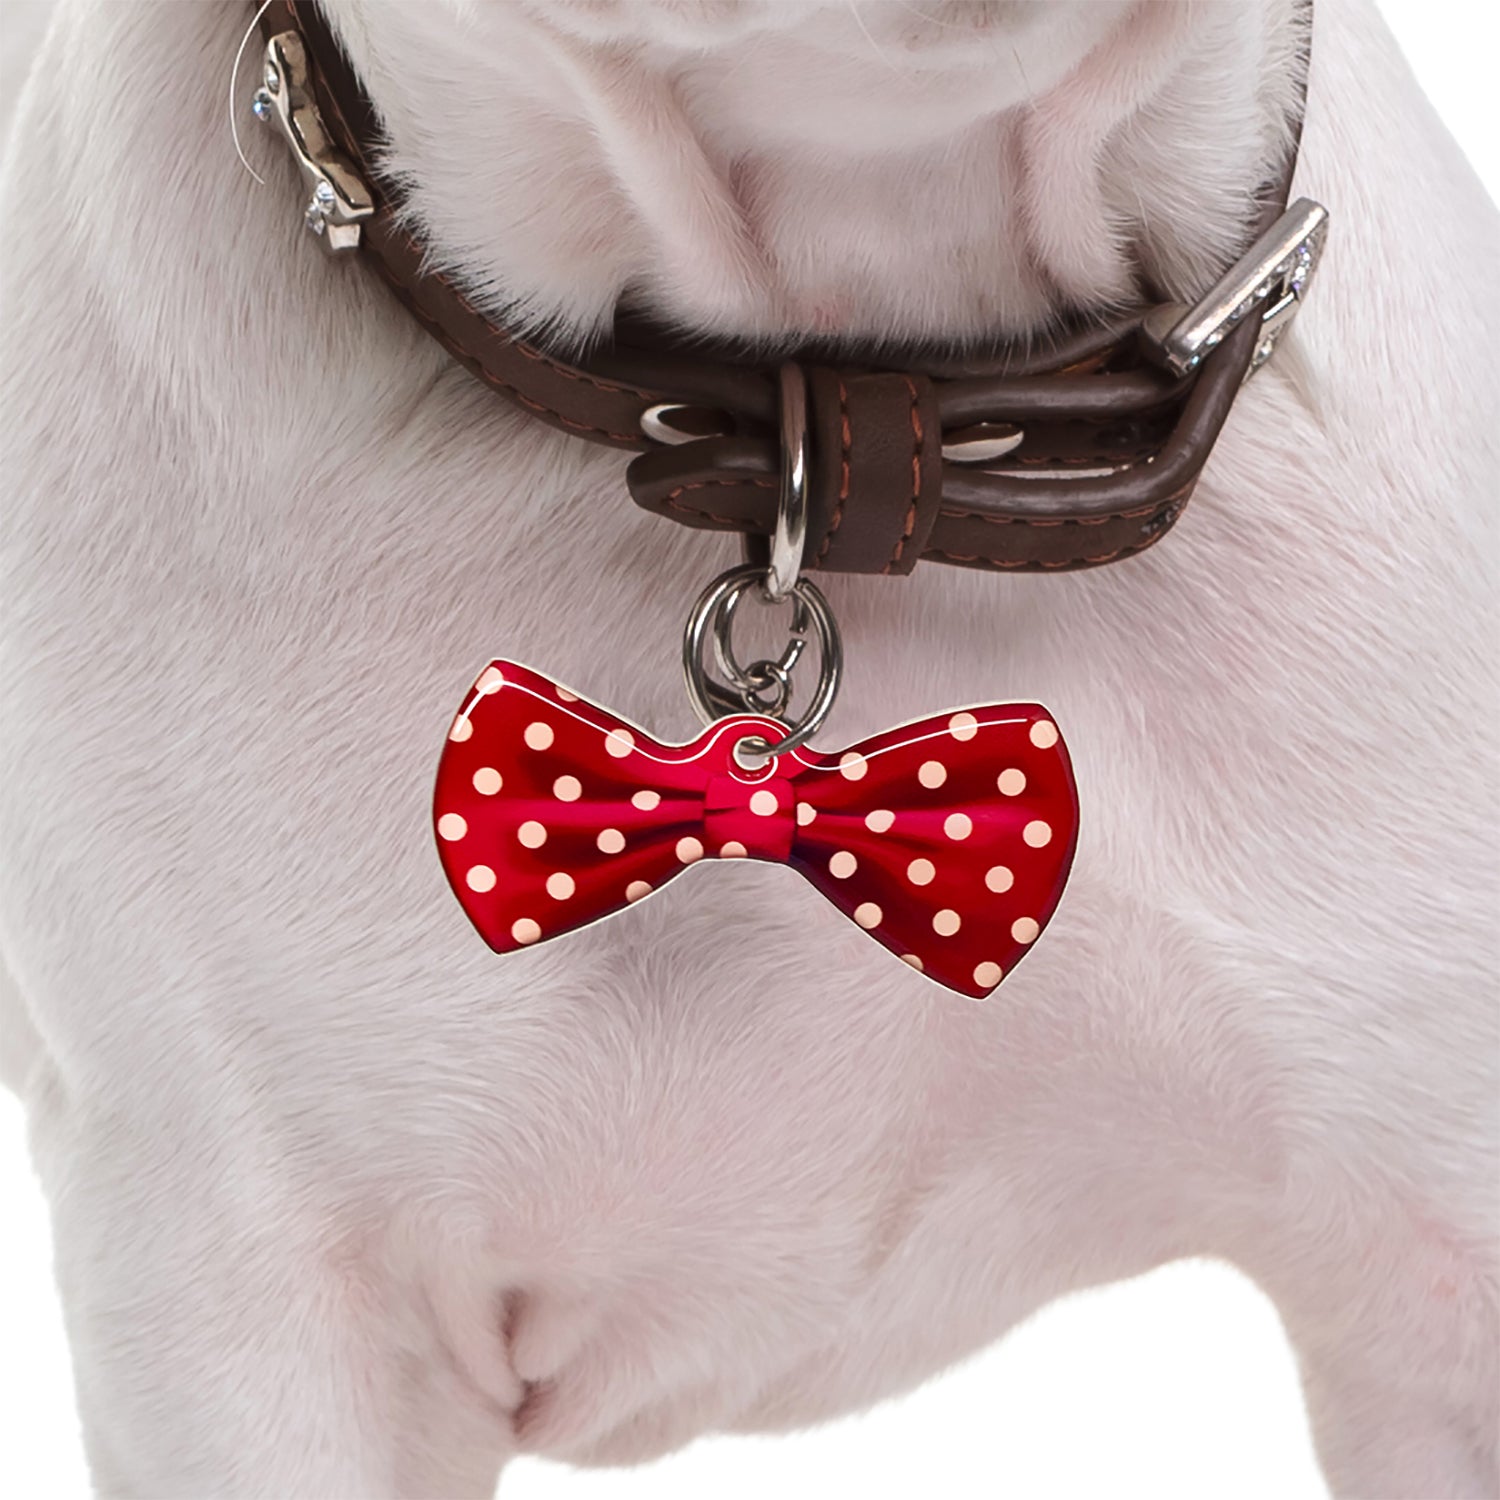 Red Round Club Polka Dots Bowtie Pet ID Tag Dog Tag | Custom Pet ID Tags by Bashtags®